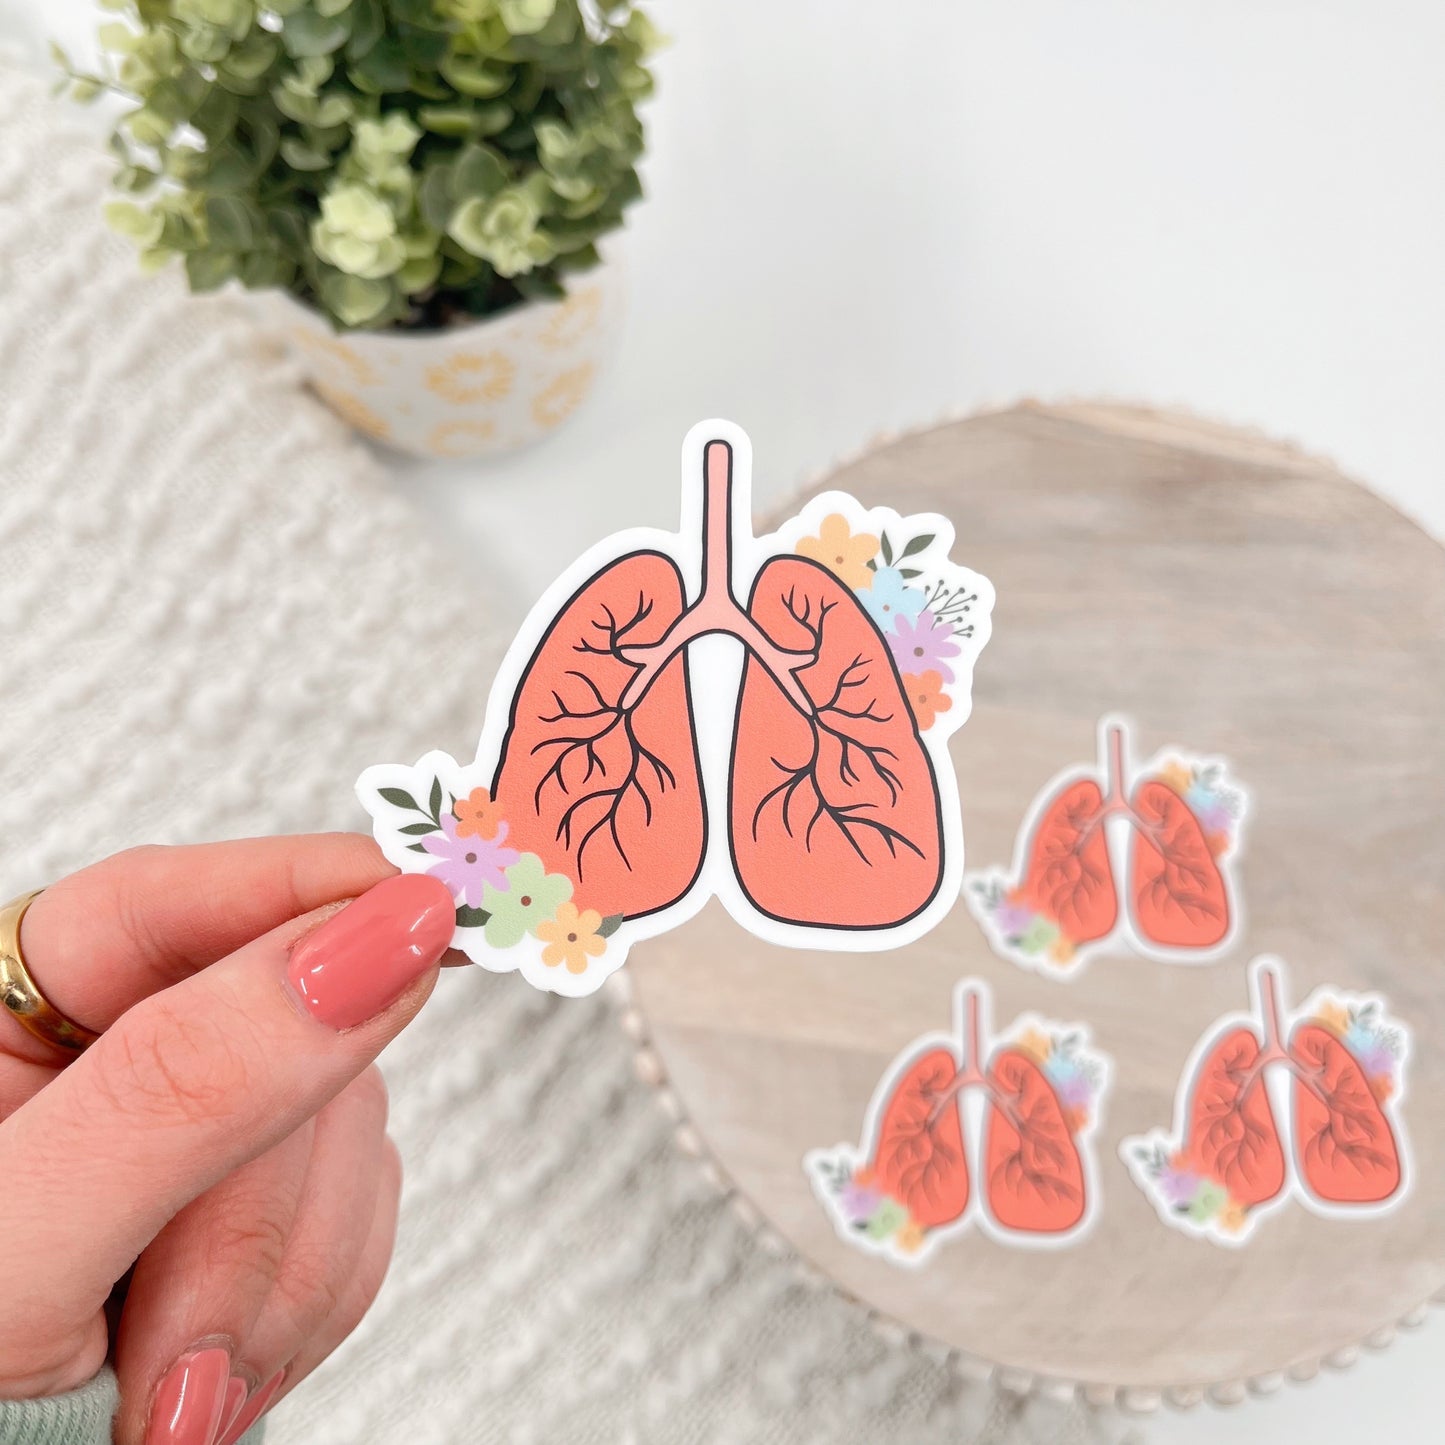 Anatomical Lungs Sticker